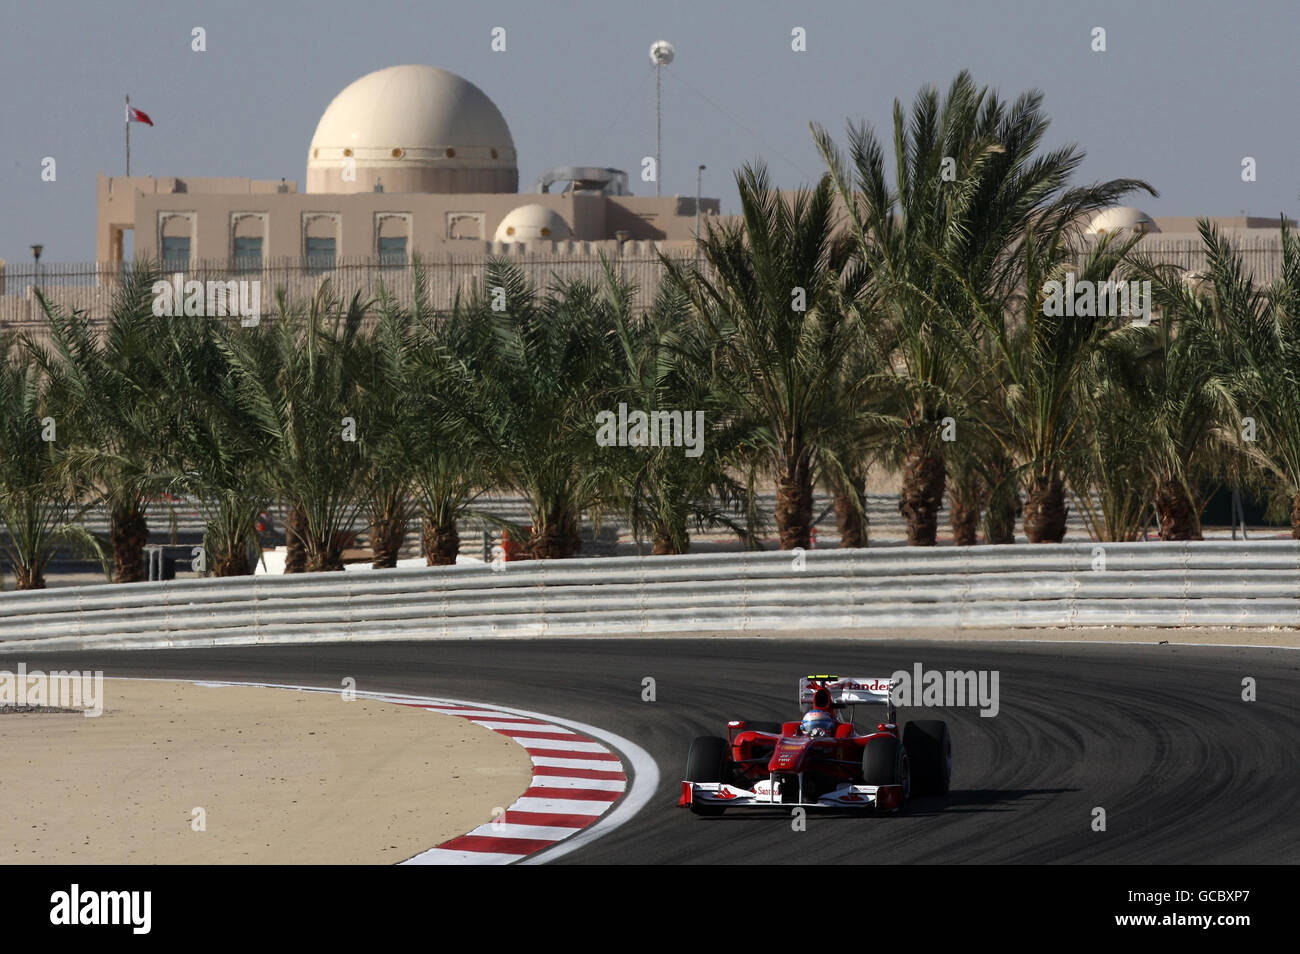 Ferrari driver Fernando Alonso on his way to victory during the Gulf Air Bahrain Grand Prix at the Bahrain International Circuit in Sakhir, Bahrain. Stock Photo